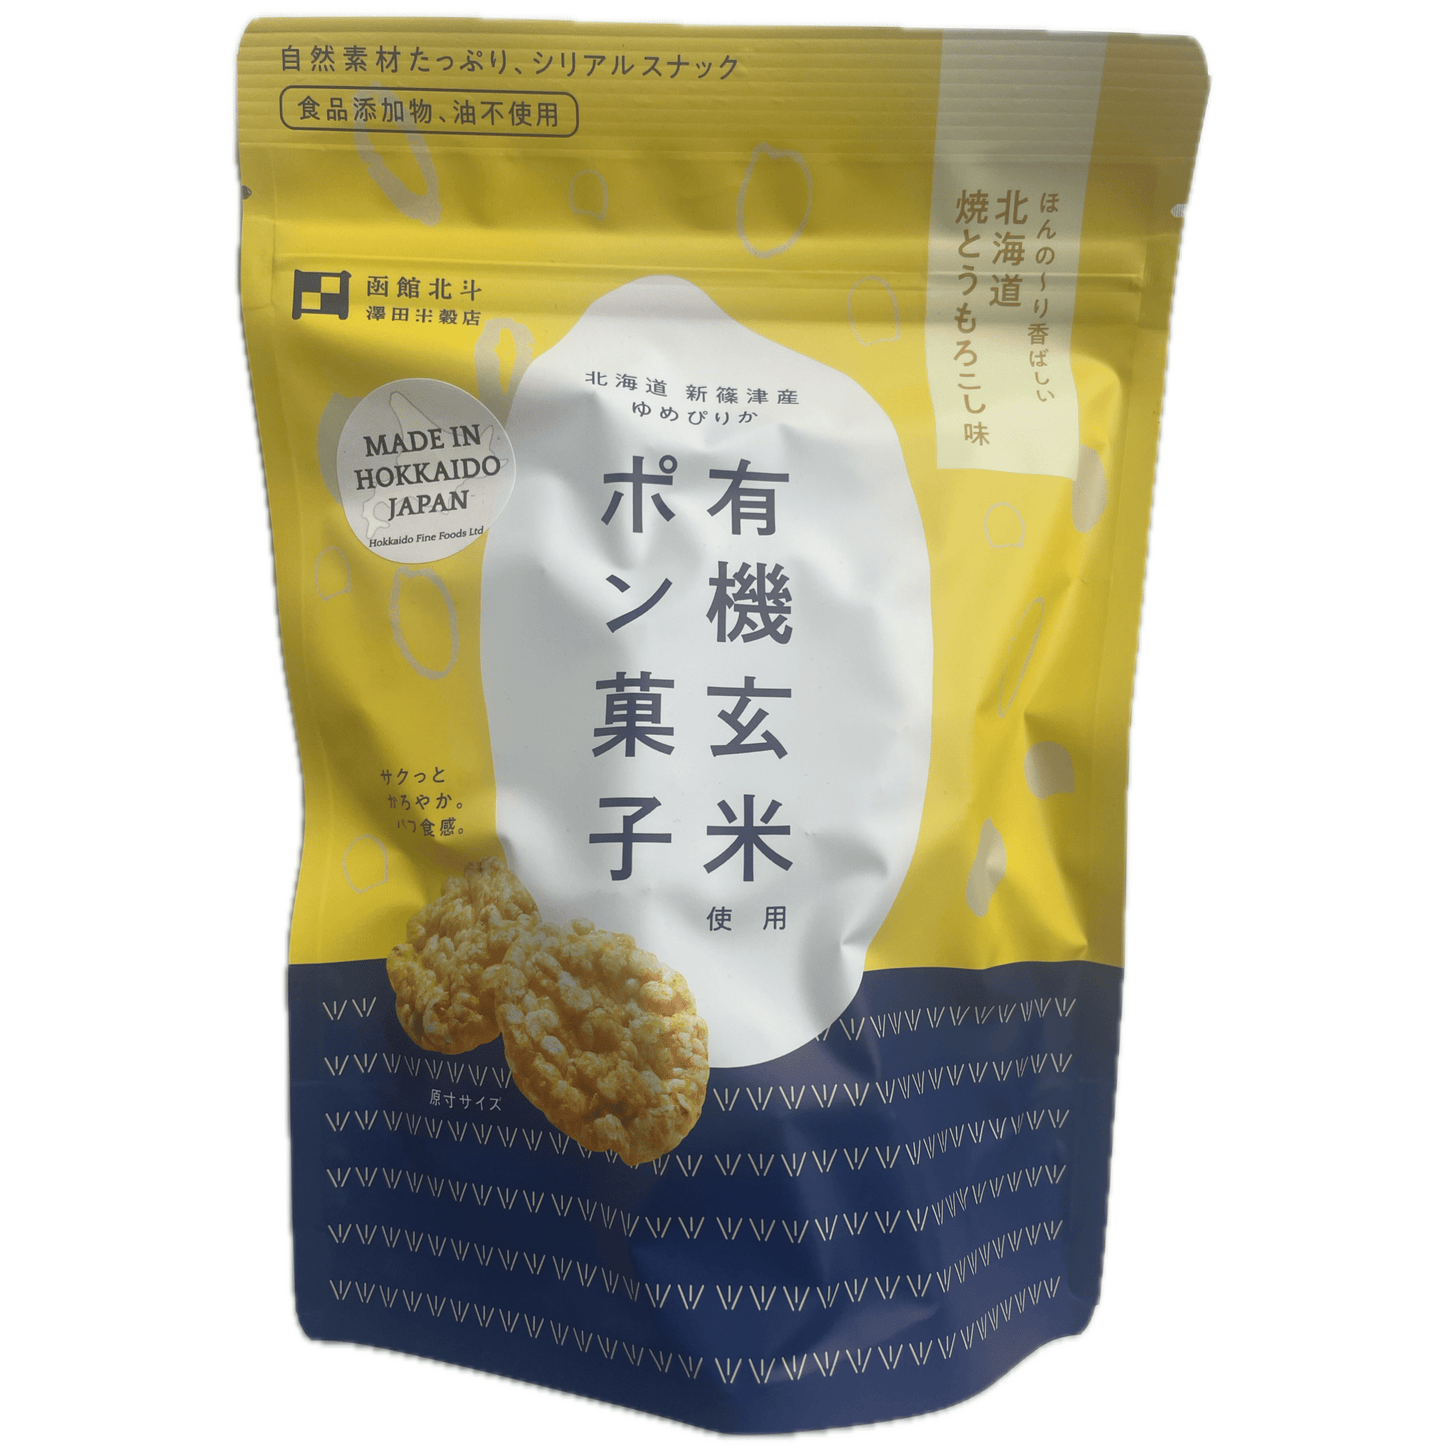 Sawada Brown Rice Cakes Hokkaido Baked Sweetcorn Flavour 30g / 澤田米穀店 有機玄米ポン菓子 北海道焼とうもろこし味 30g - RiceWineShop